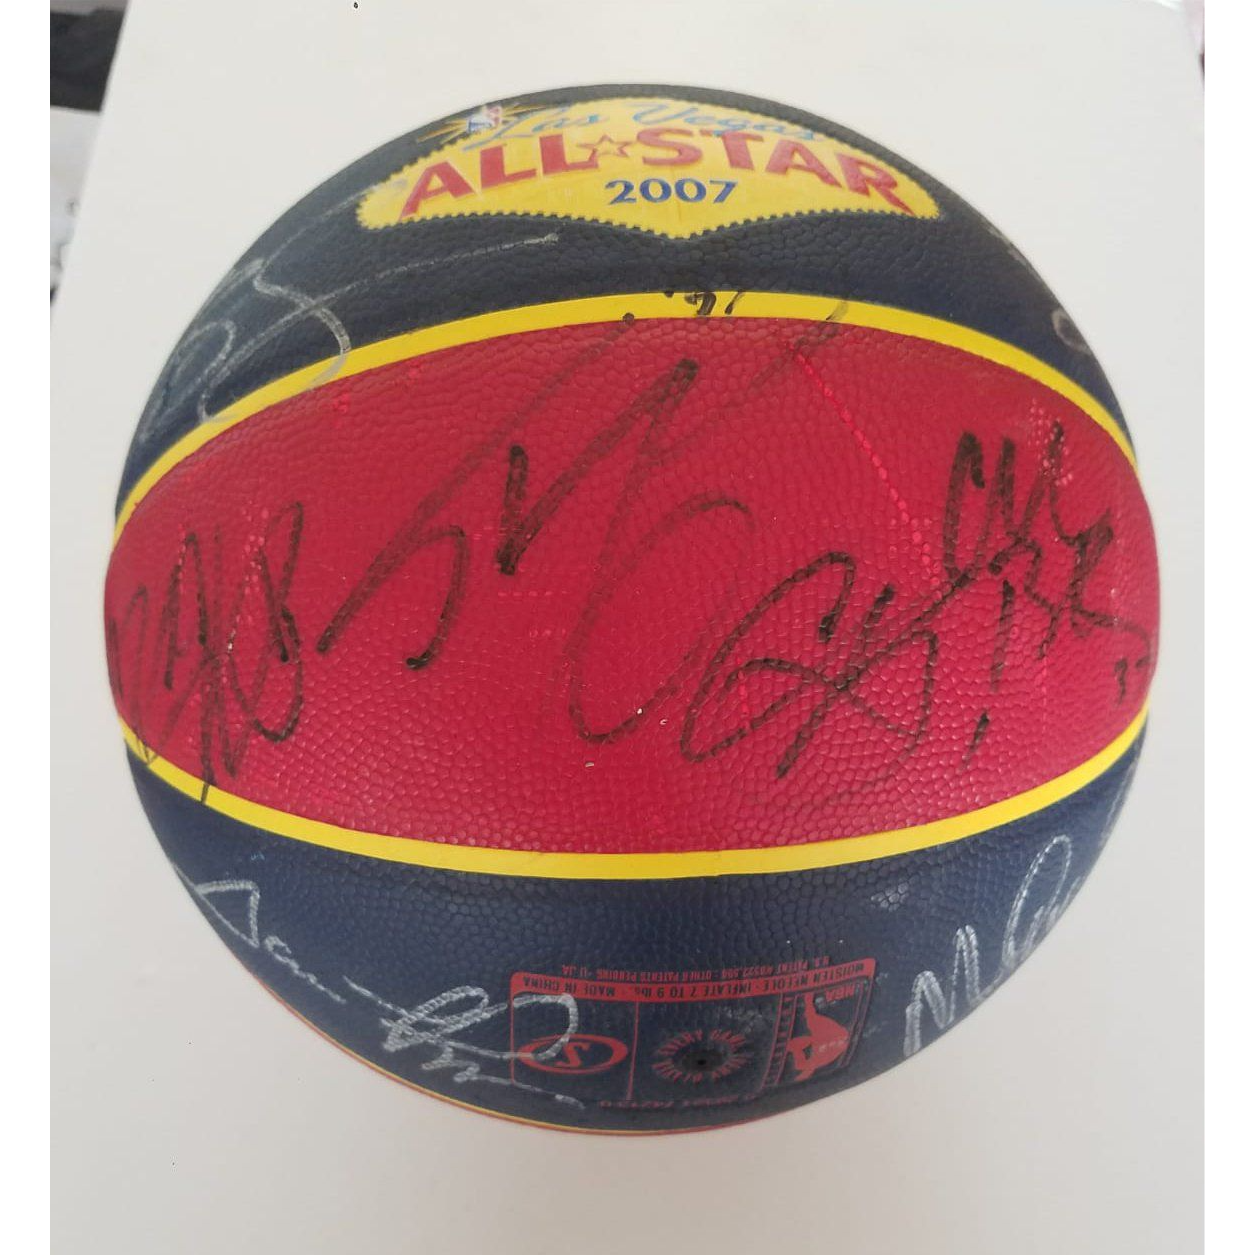 Michael Jordan Kobe Bryant Dwyane Wade Allen Iverson 2007 NBA All-Star game limited edition ball signed